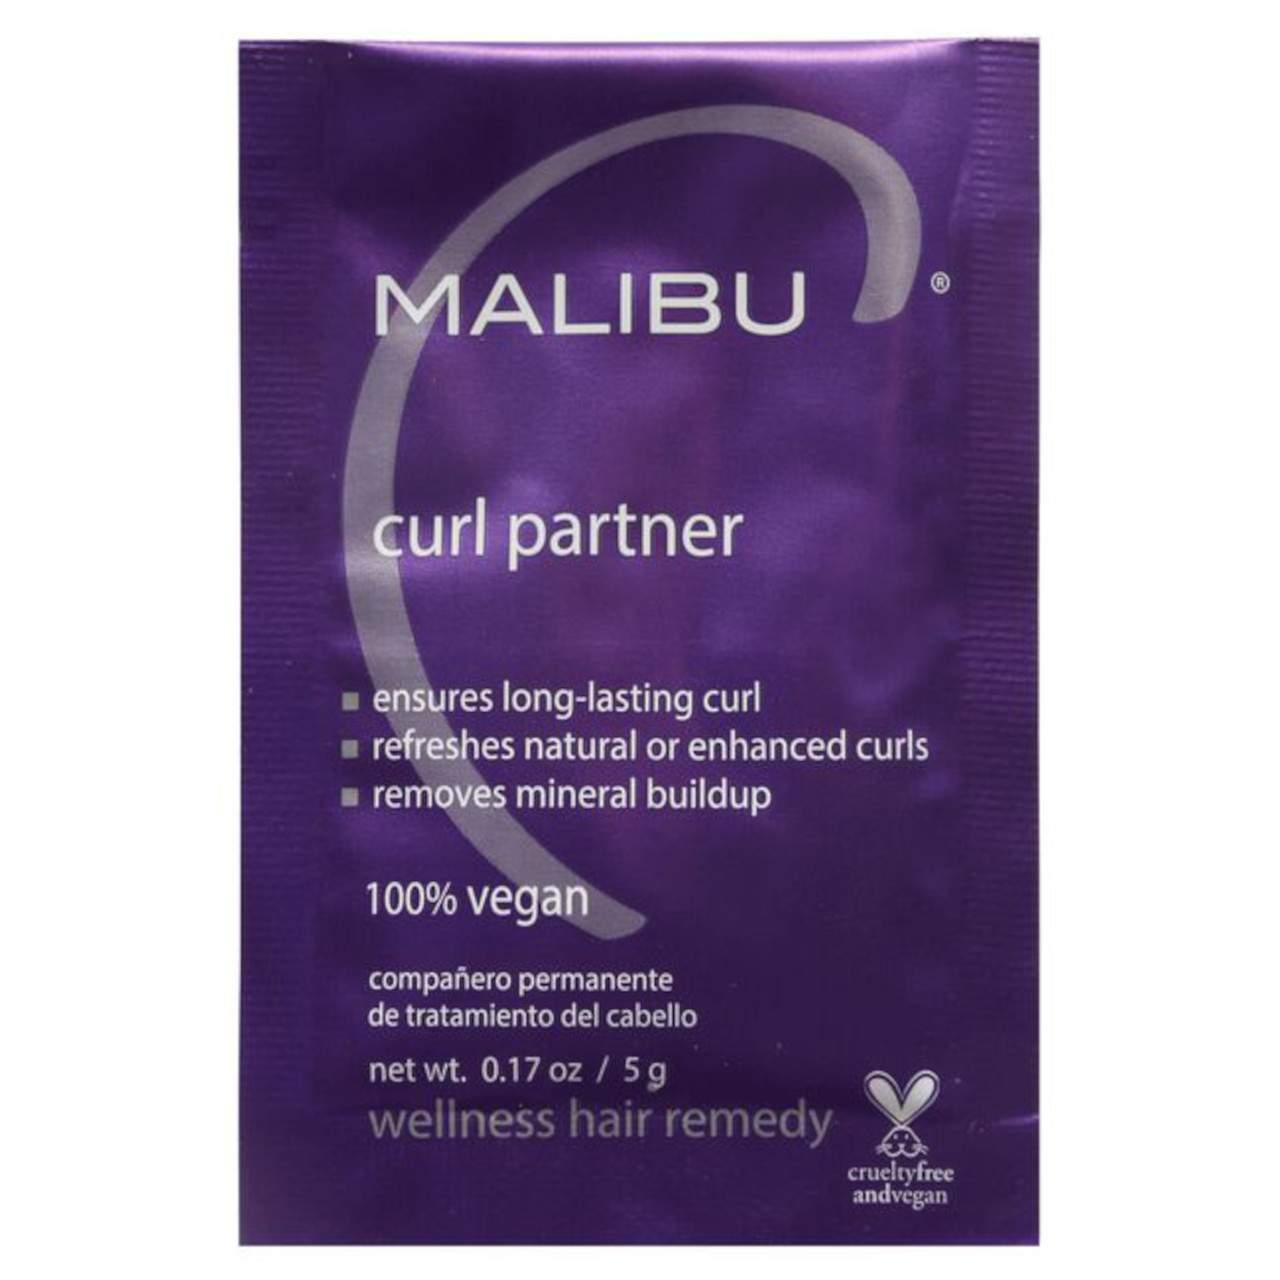 Malibu C Curl Partner Remedy Box